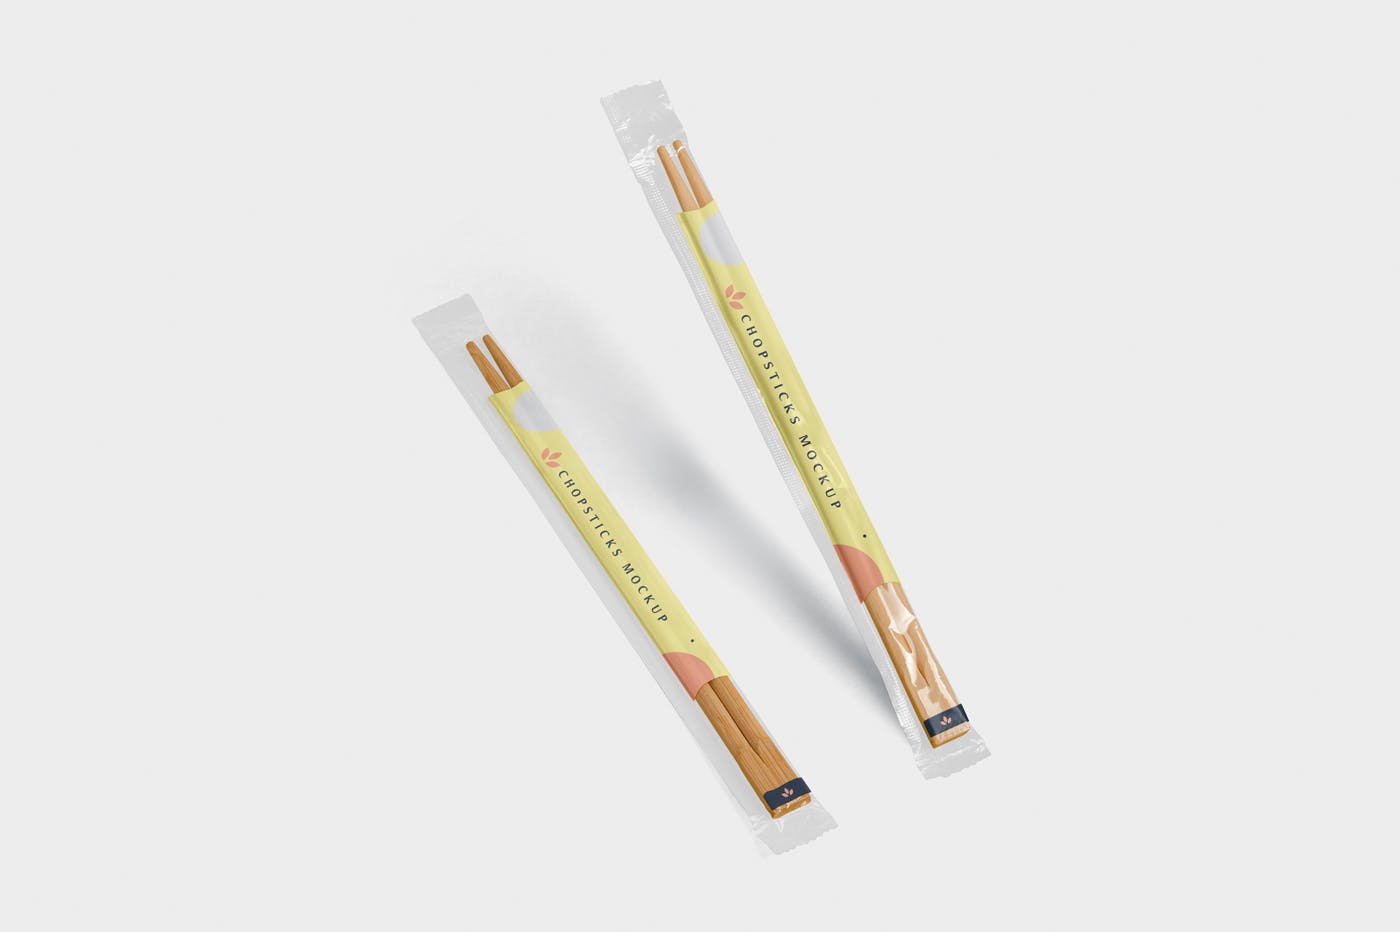 筷子透明包装设计效果图样机 Chopsticks Mockup in Transparent Packaging插图(2)